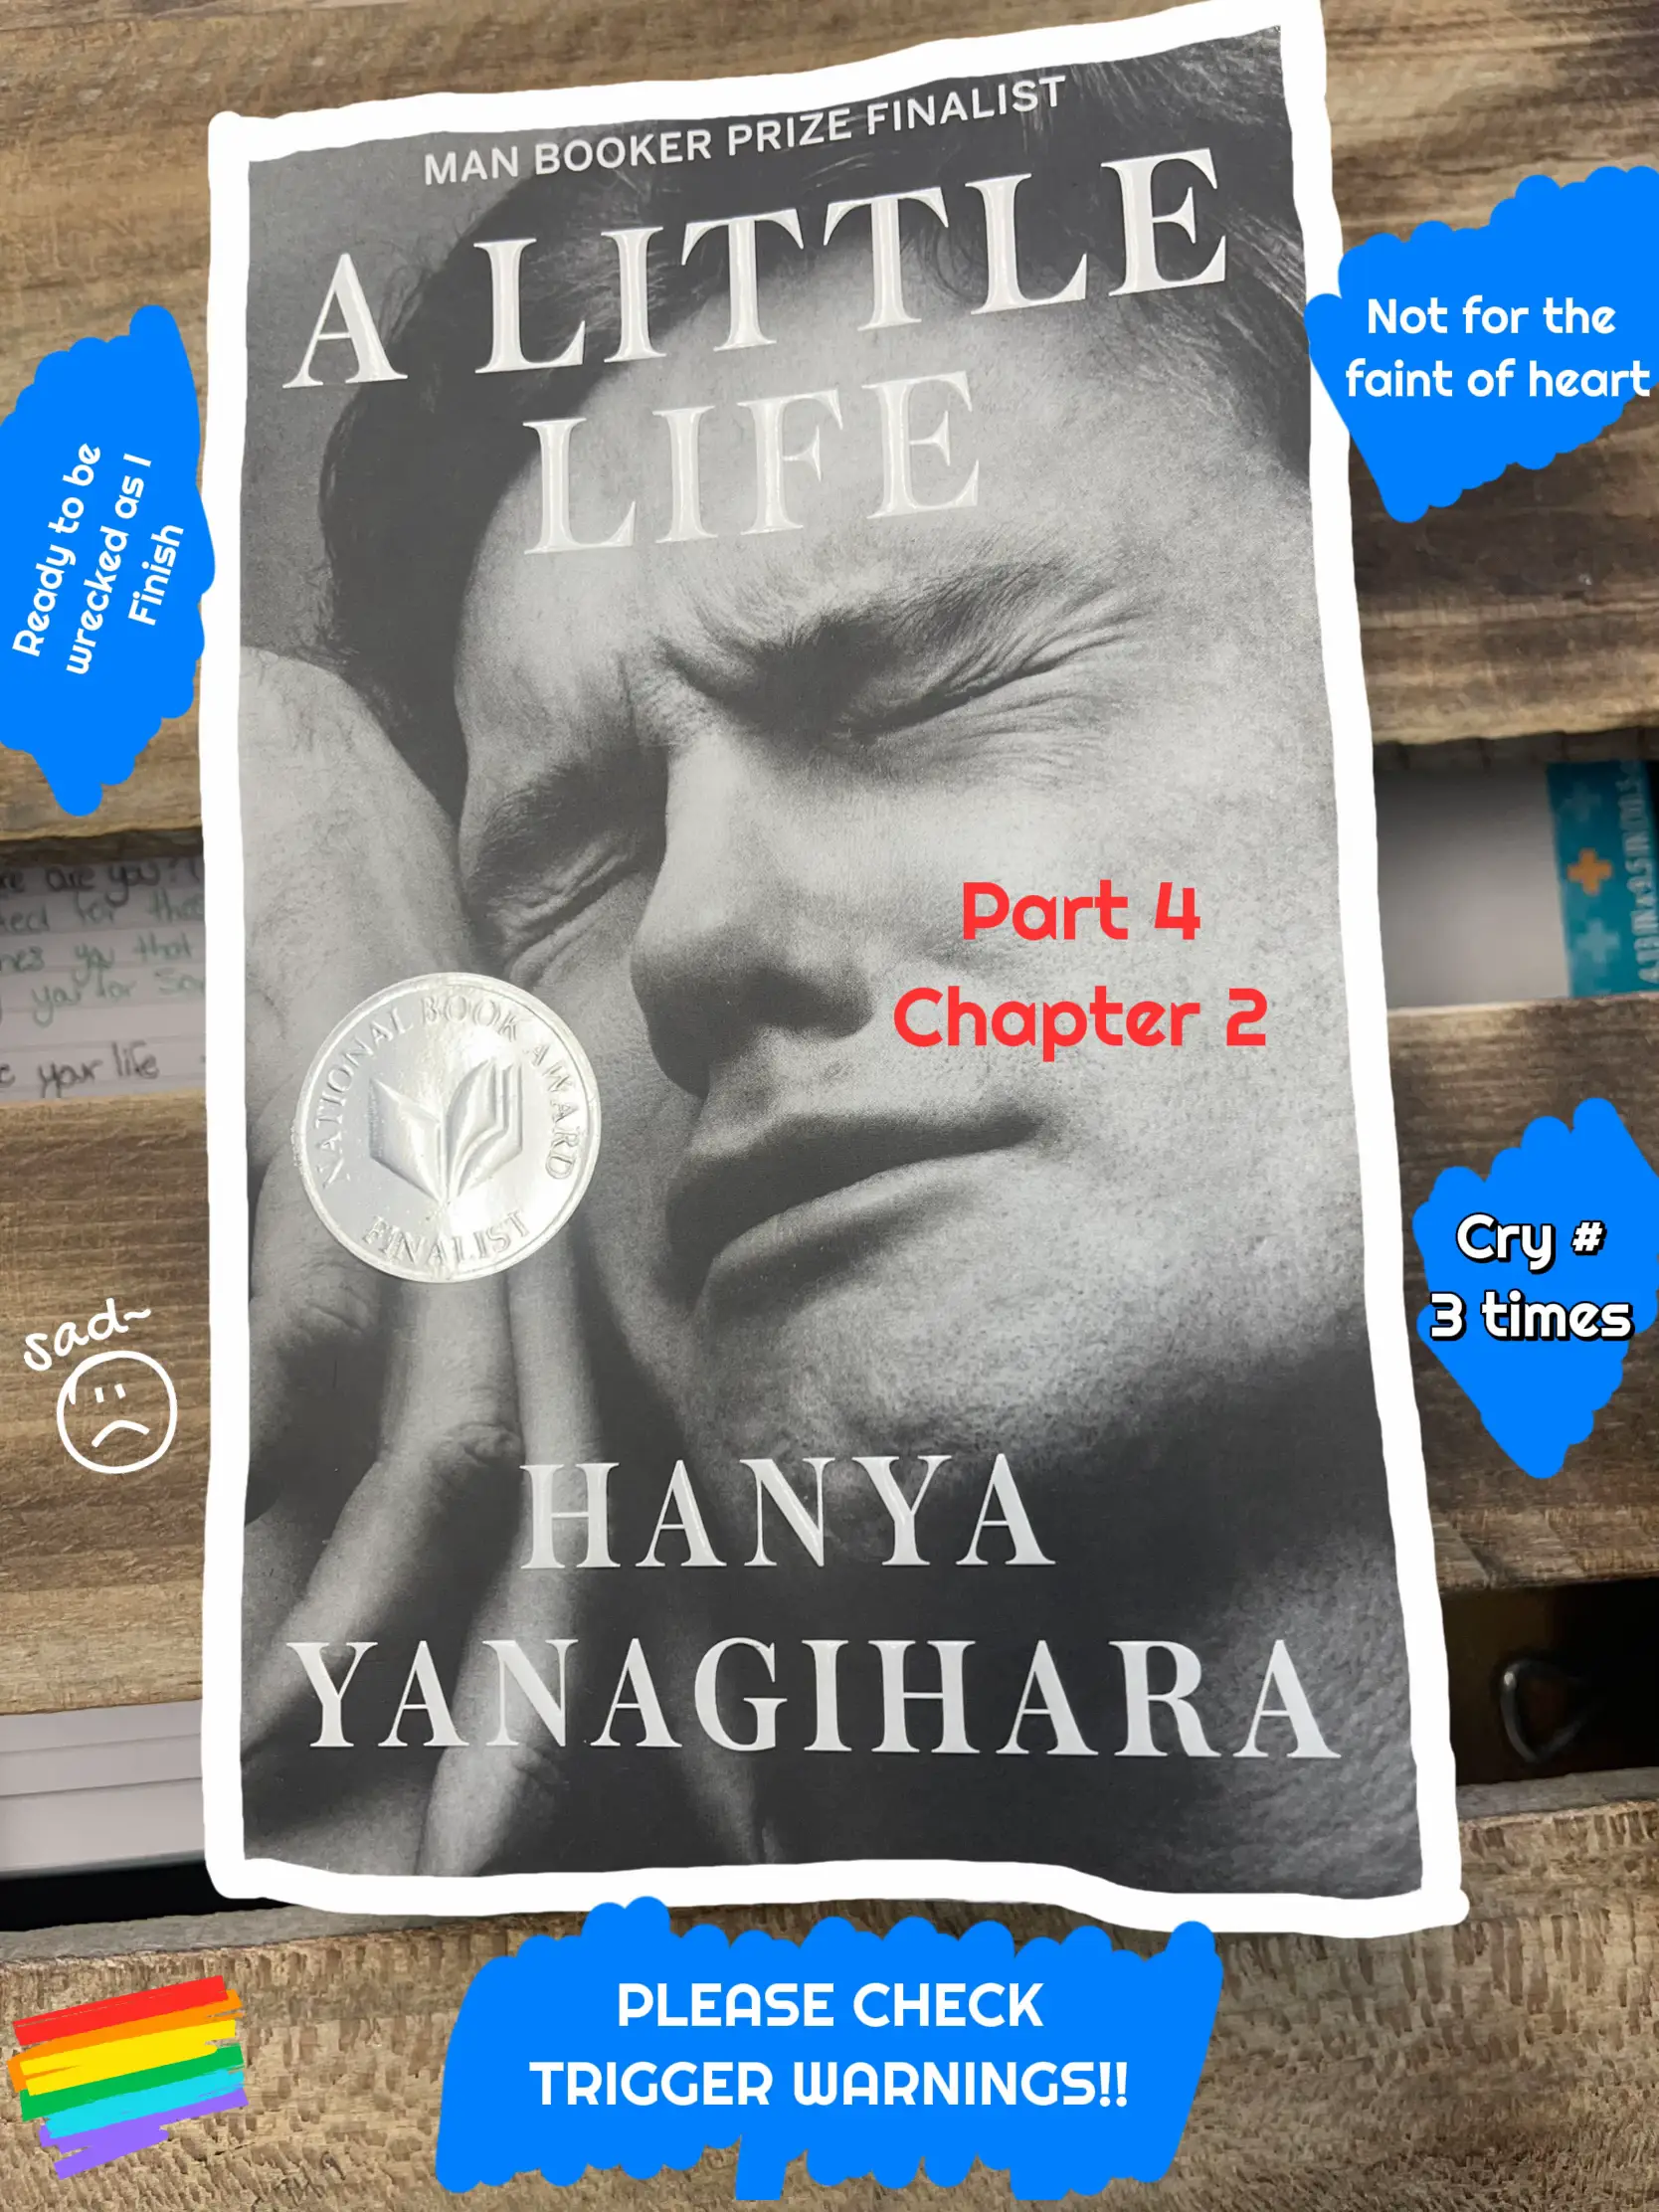 Coffee Break: I Read A Little Life by Hanya Yanagihara